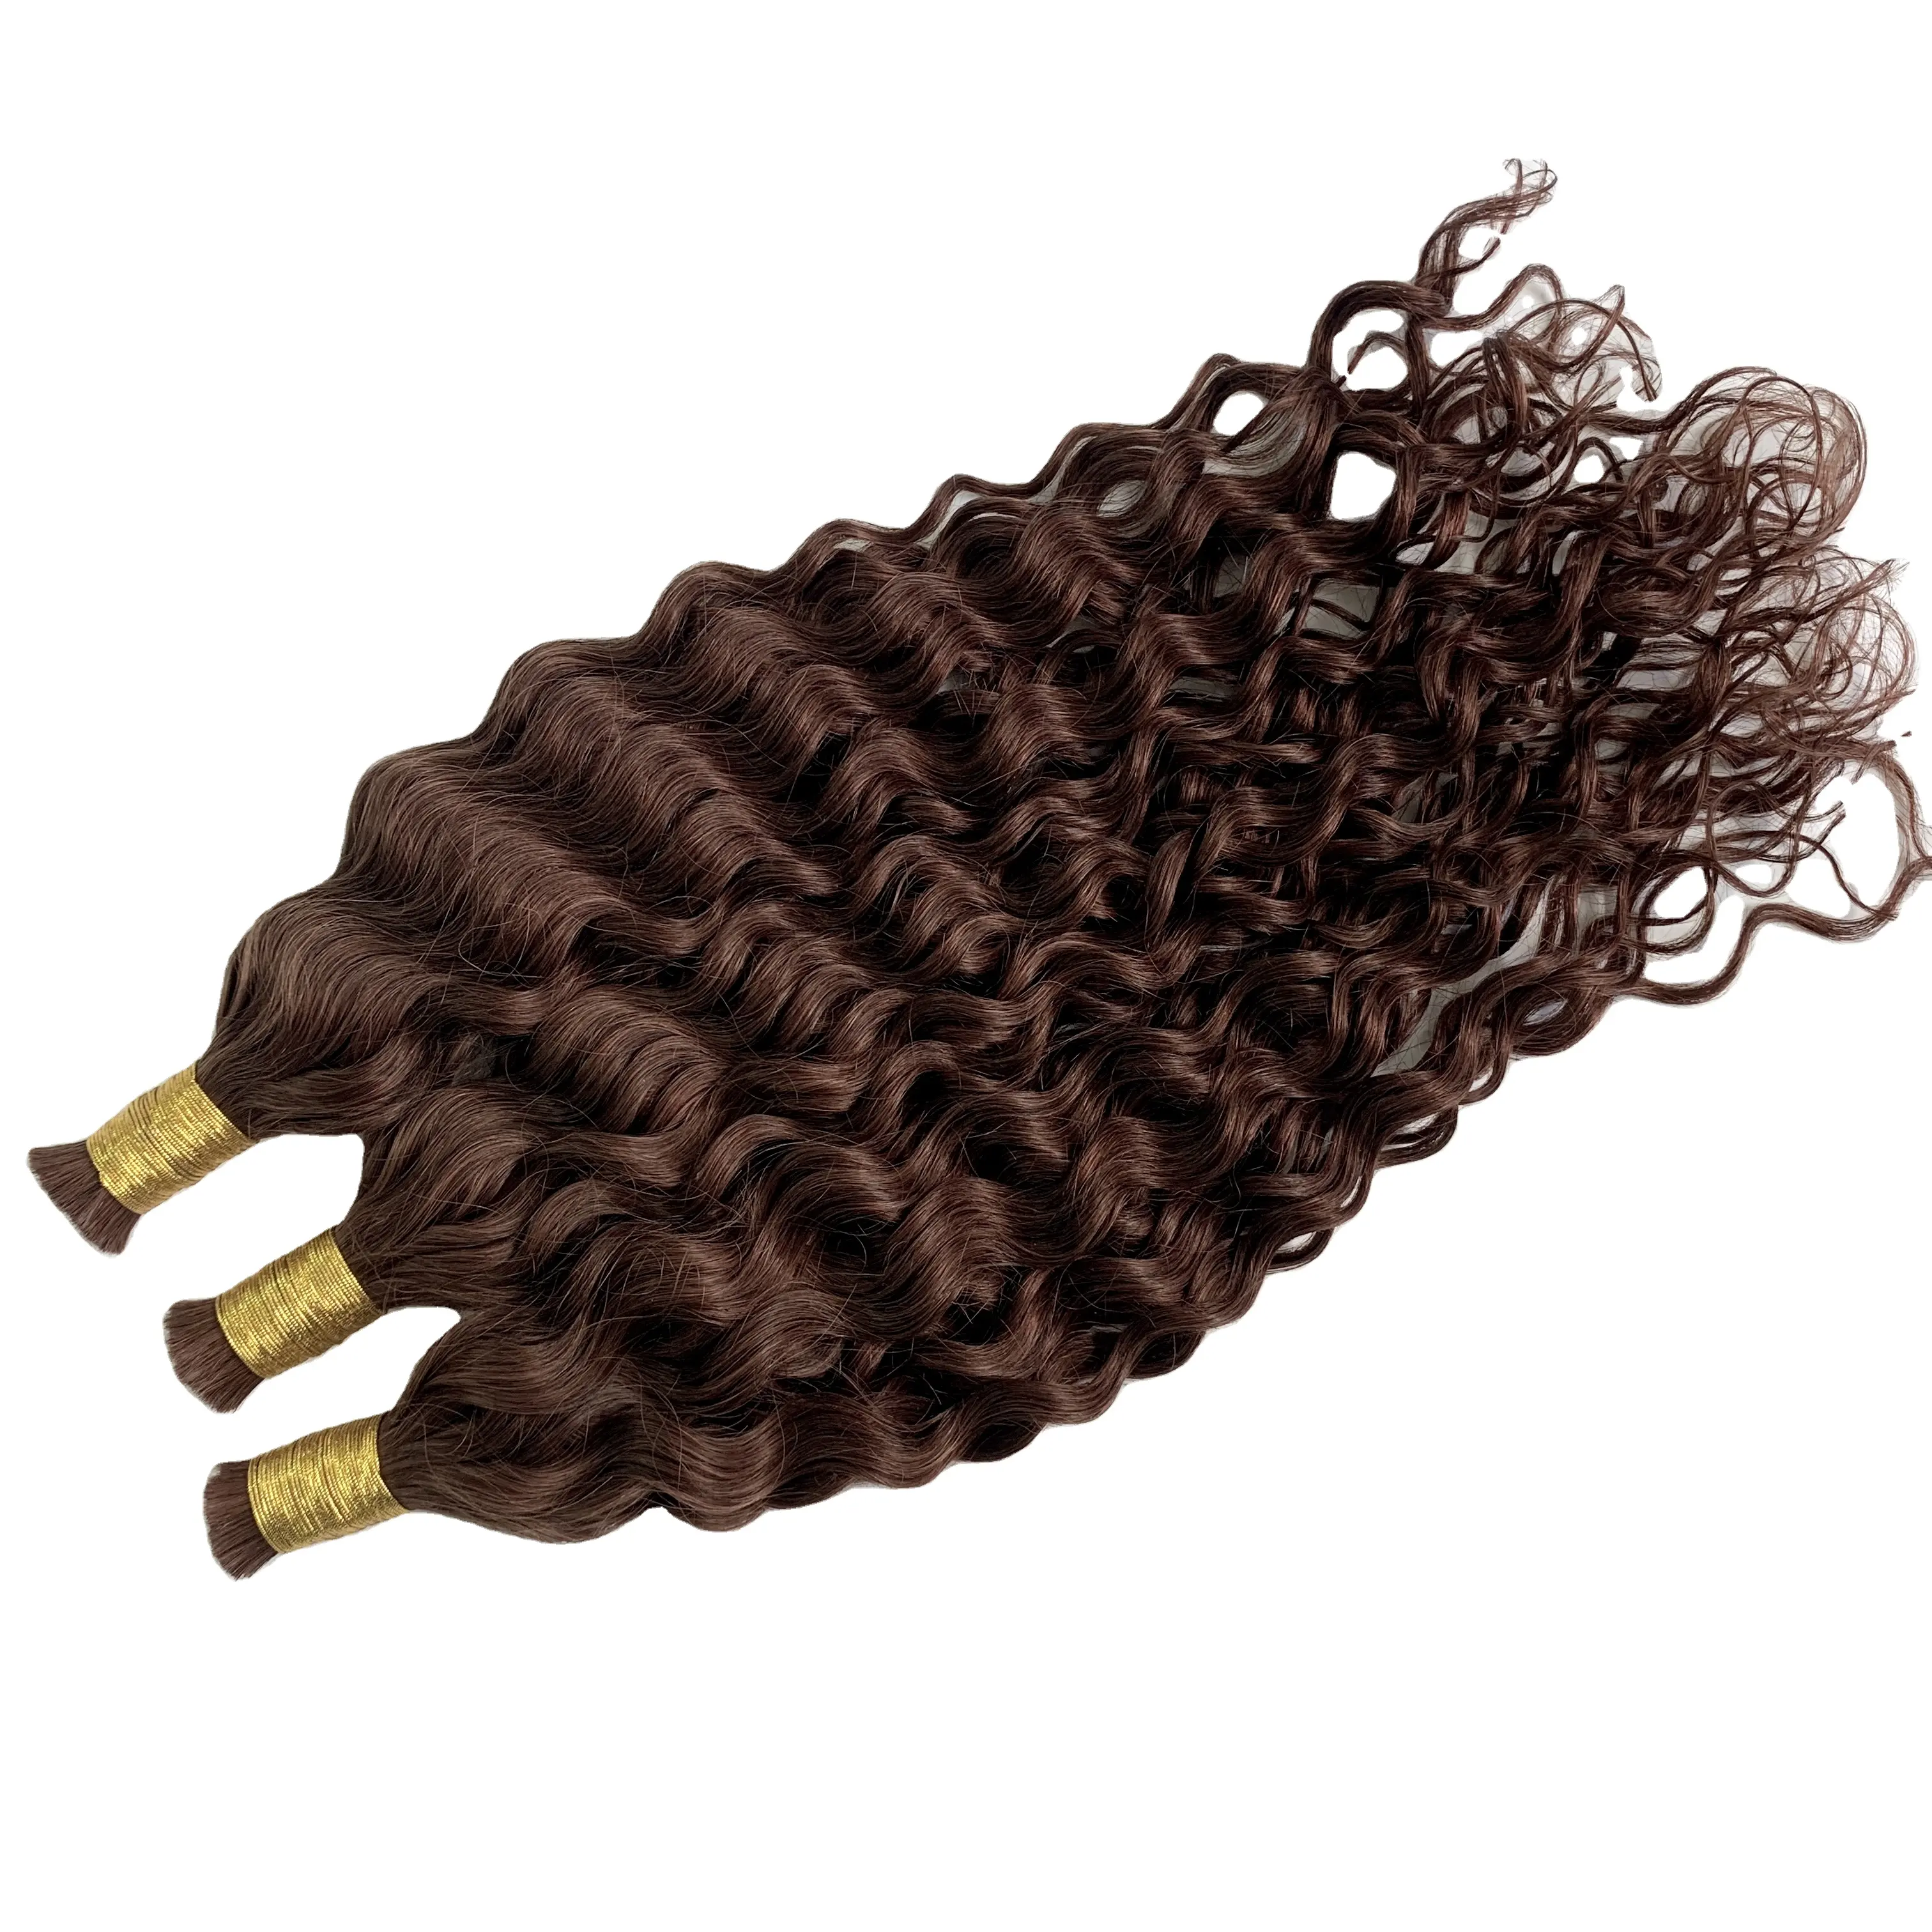 wholesale price bundles hair for braiding #33 curly human braiding hair bulk human Hair For Braiding